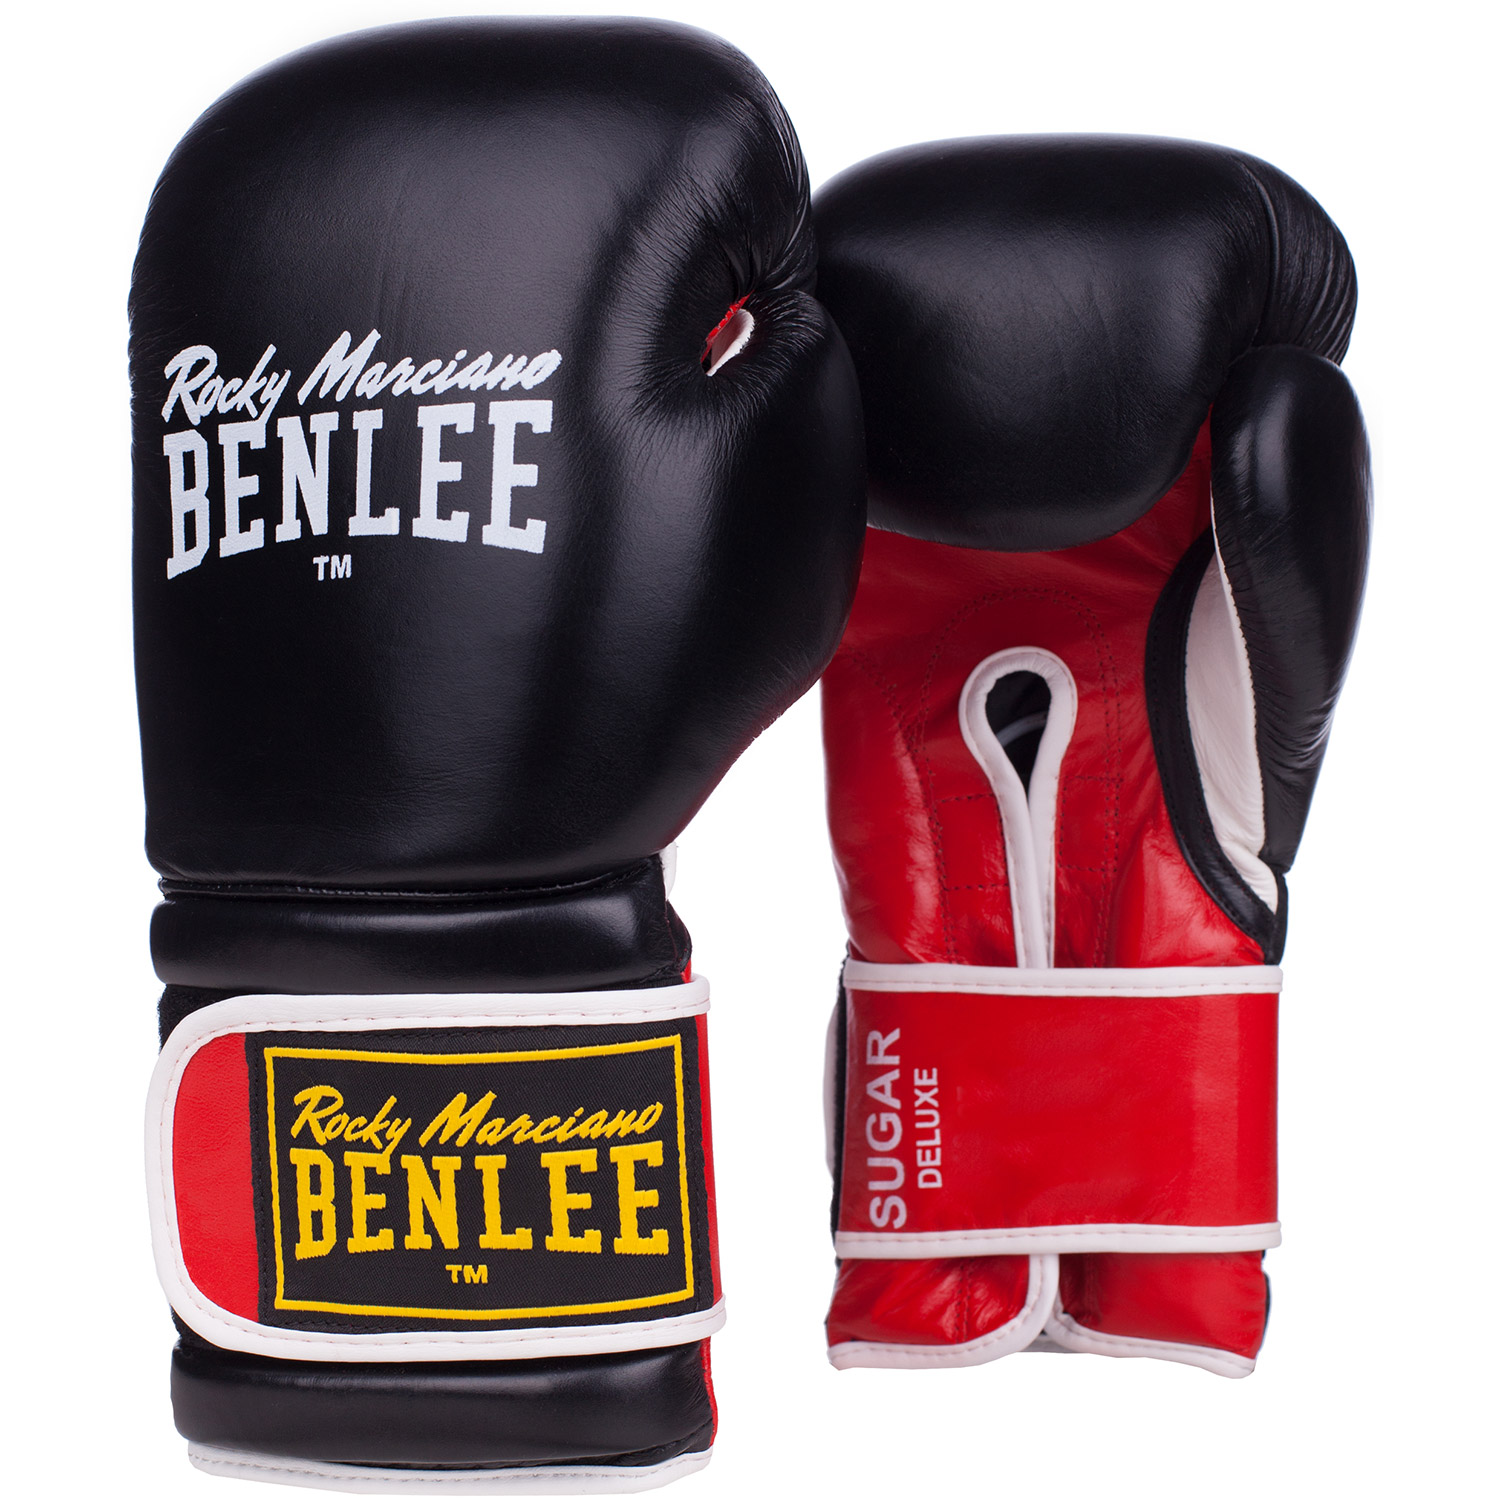 Benlee Sugar Deluxe boxing gloves 16 oz